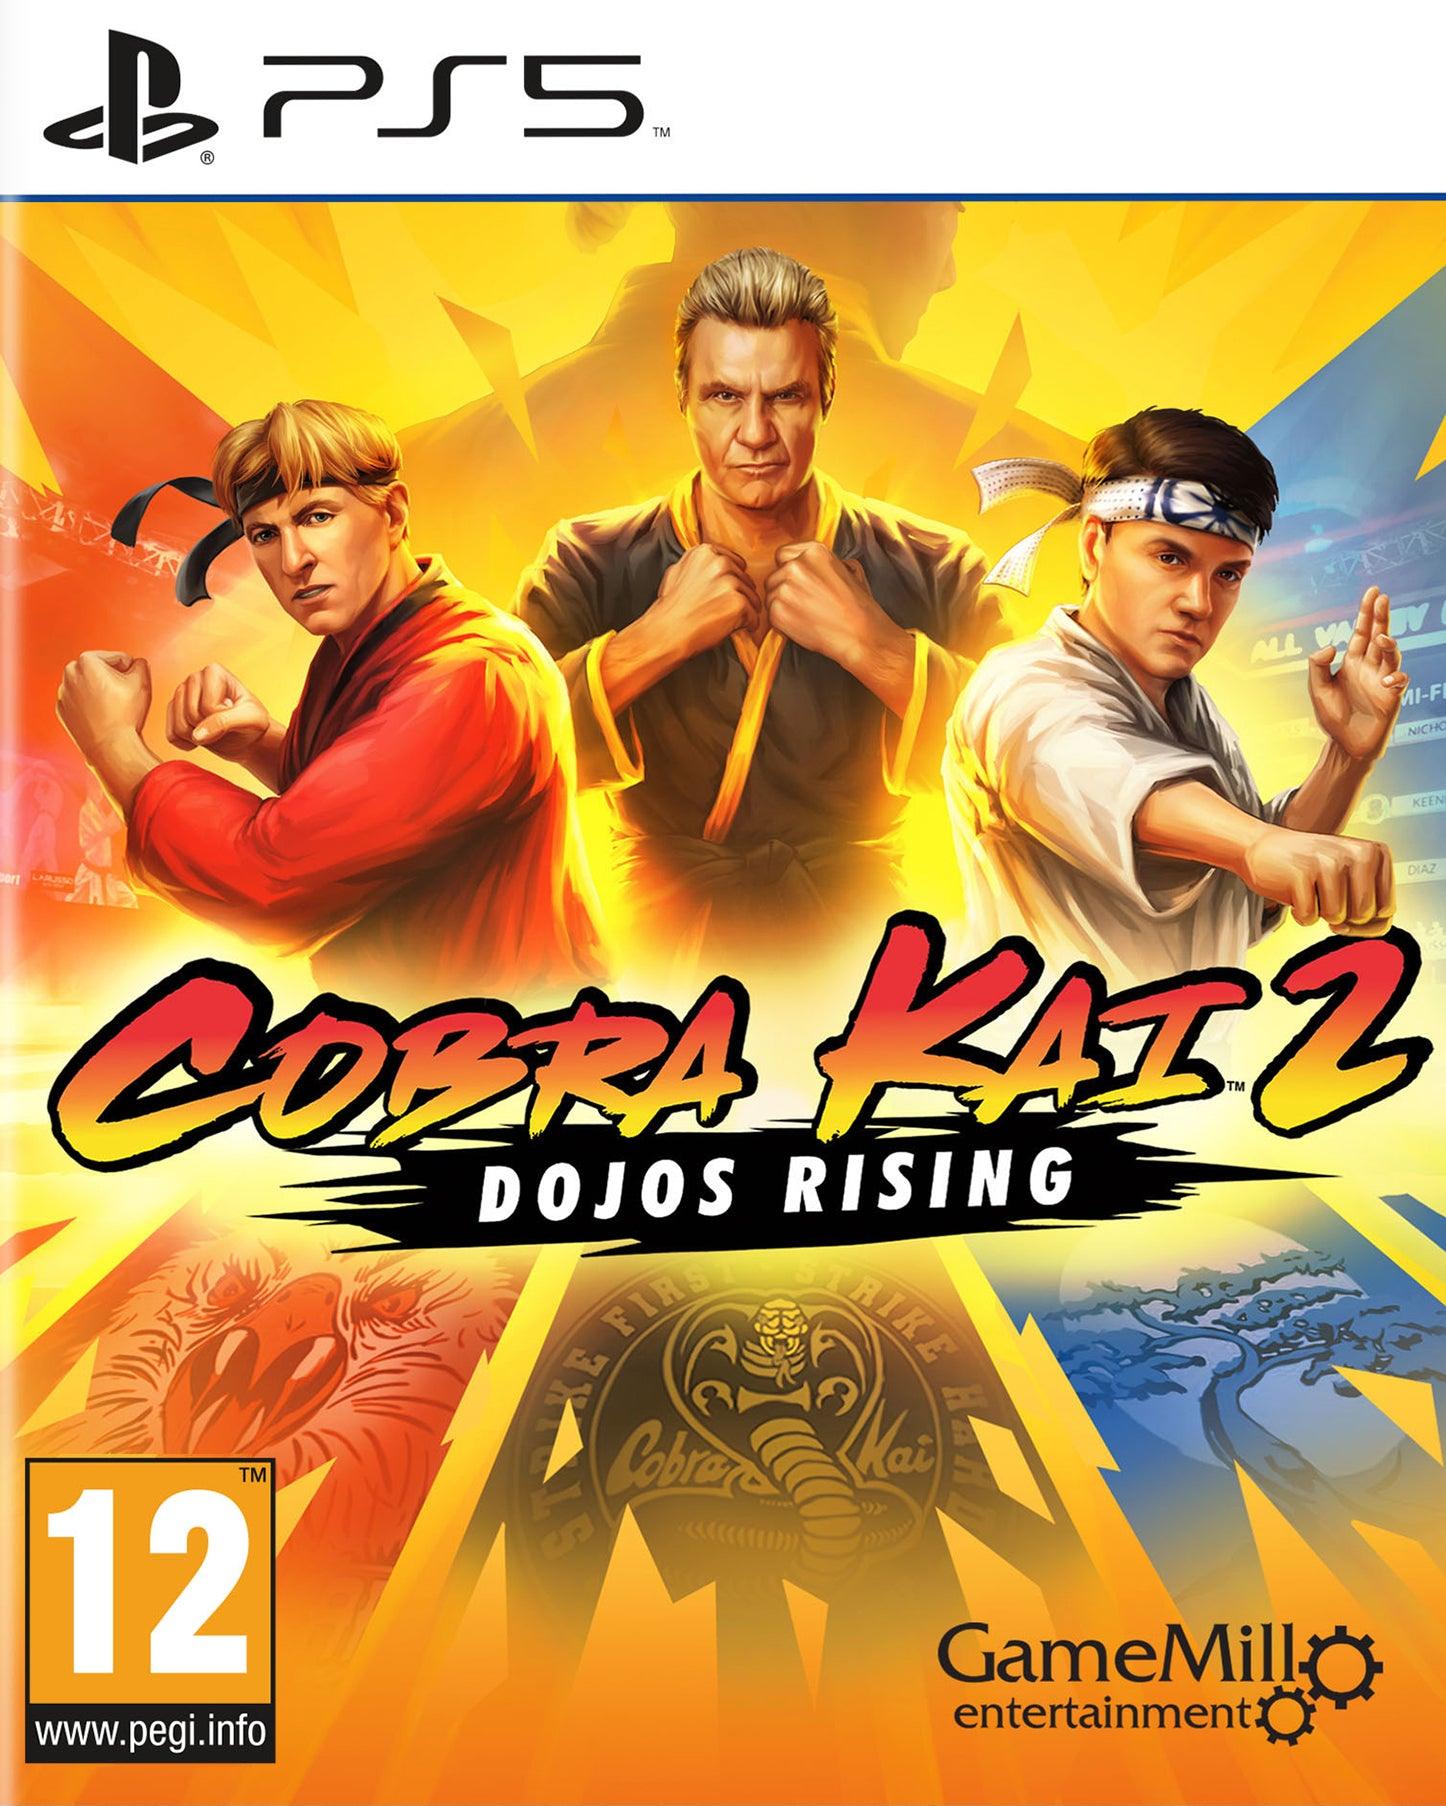 Cobra Kai 2 Dojos Rising - Want a New Gadget